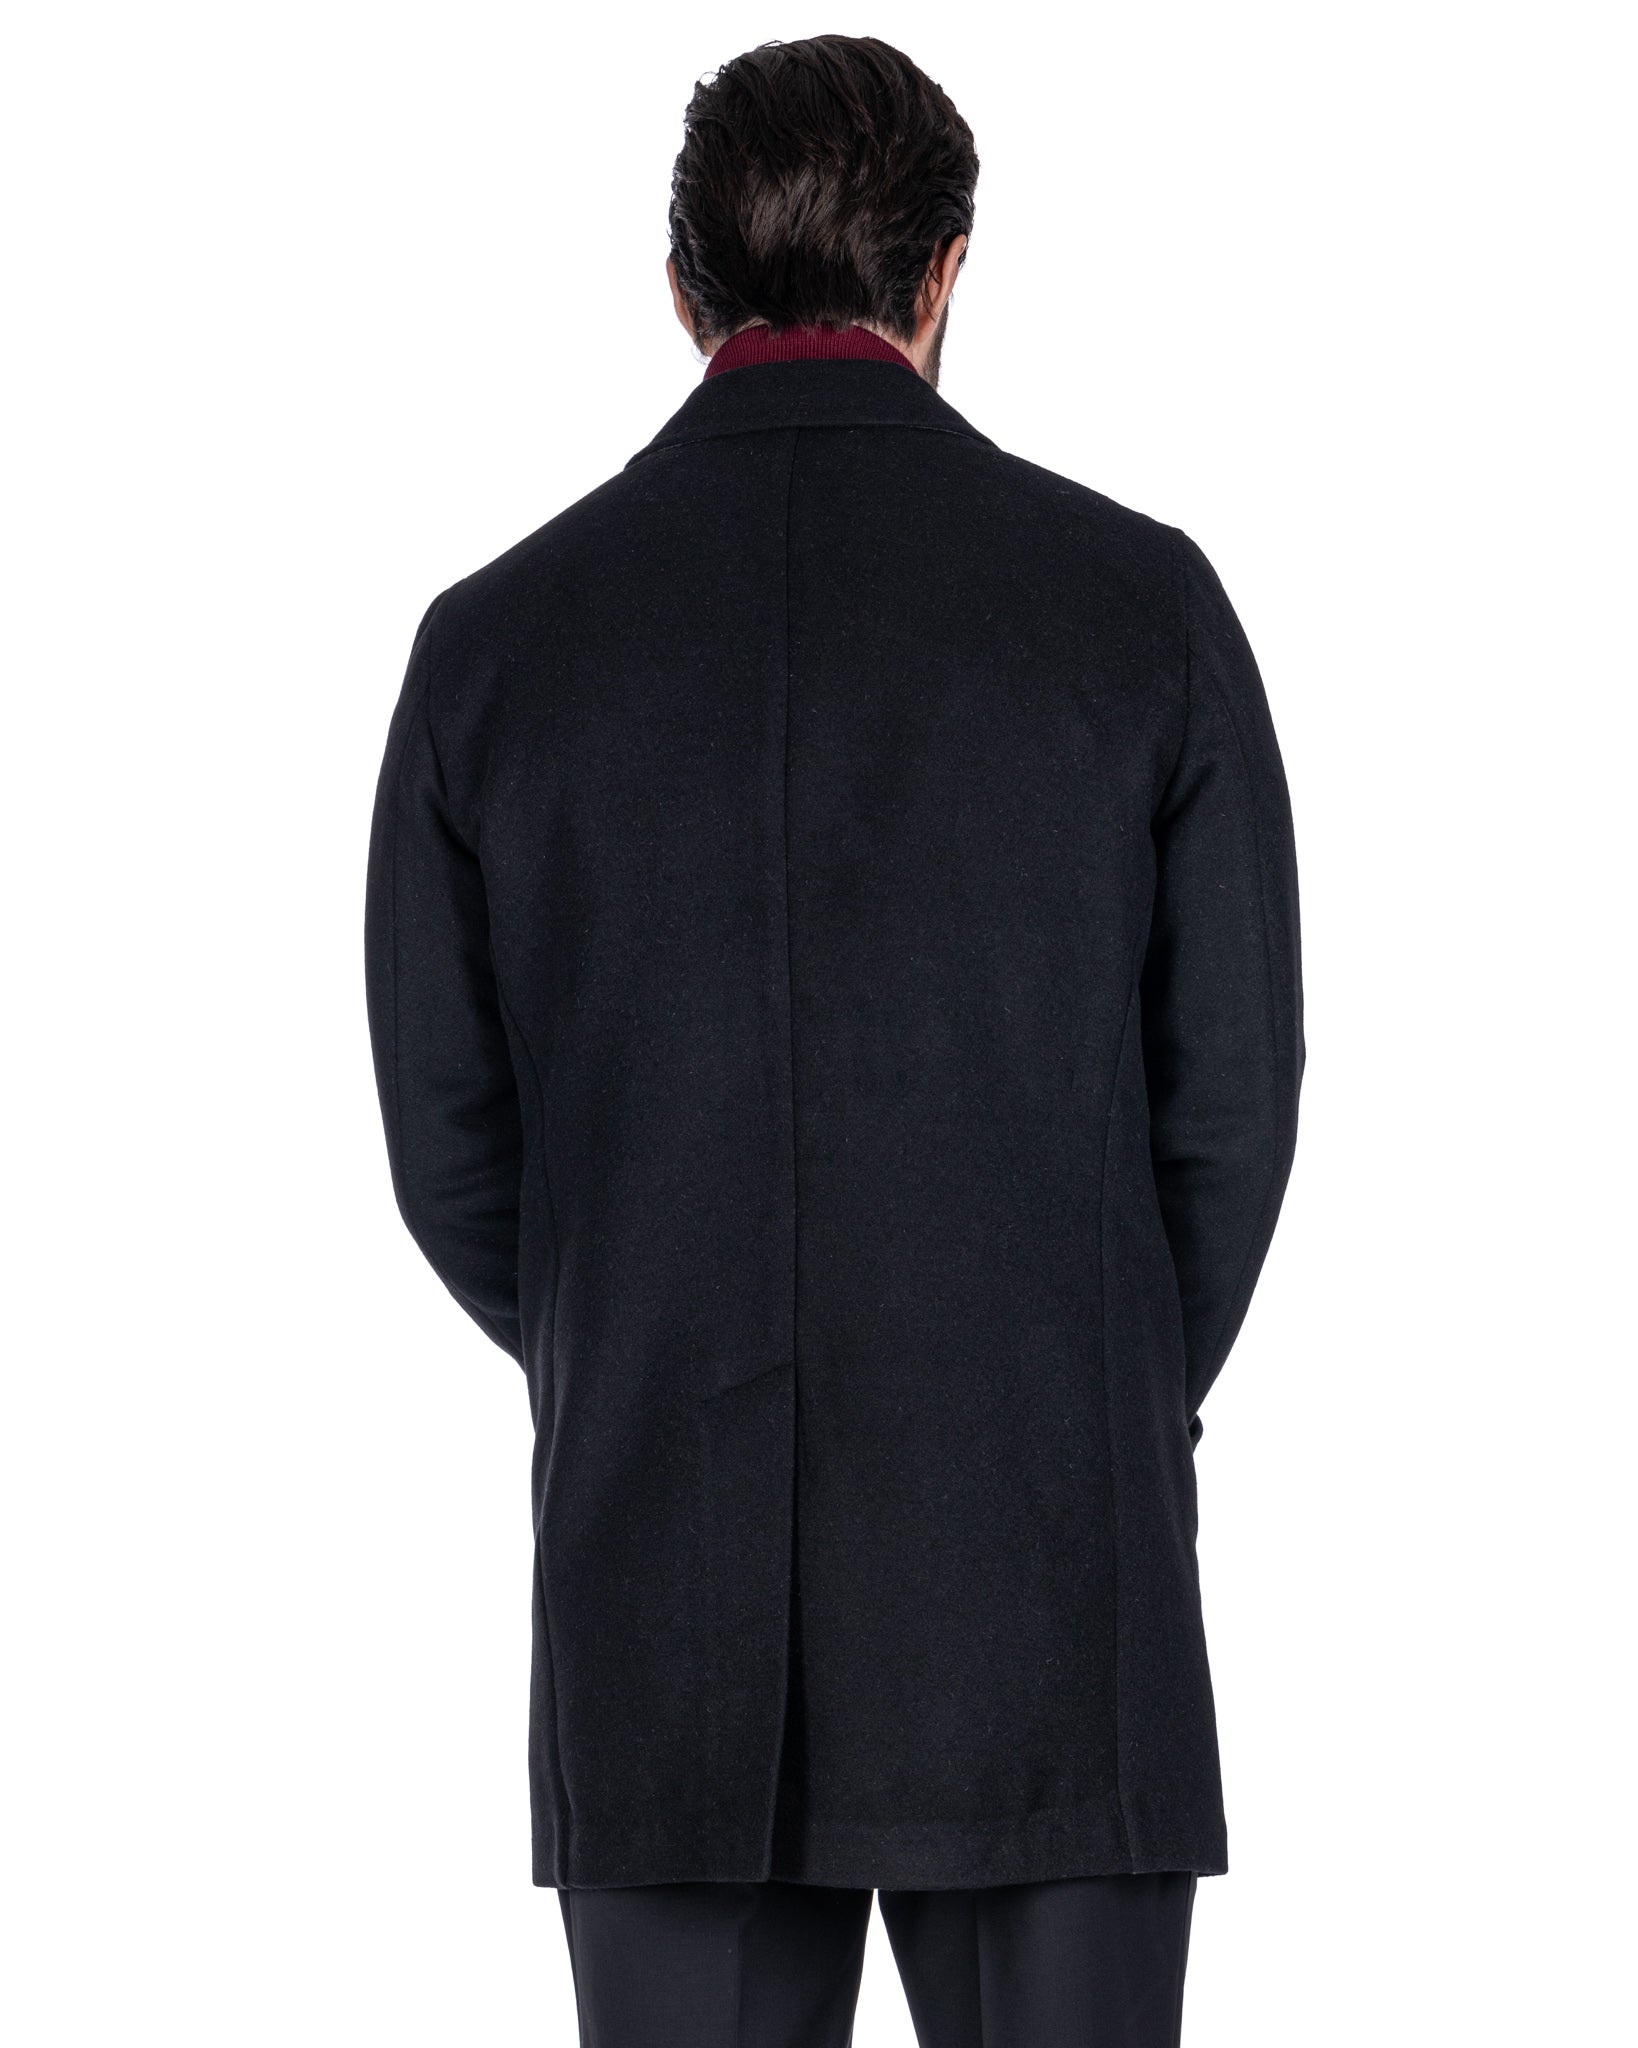 Philippe - black single-breasted coat